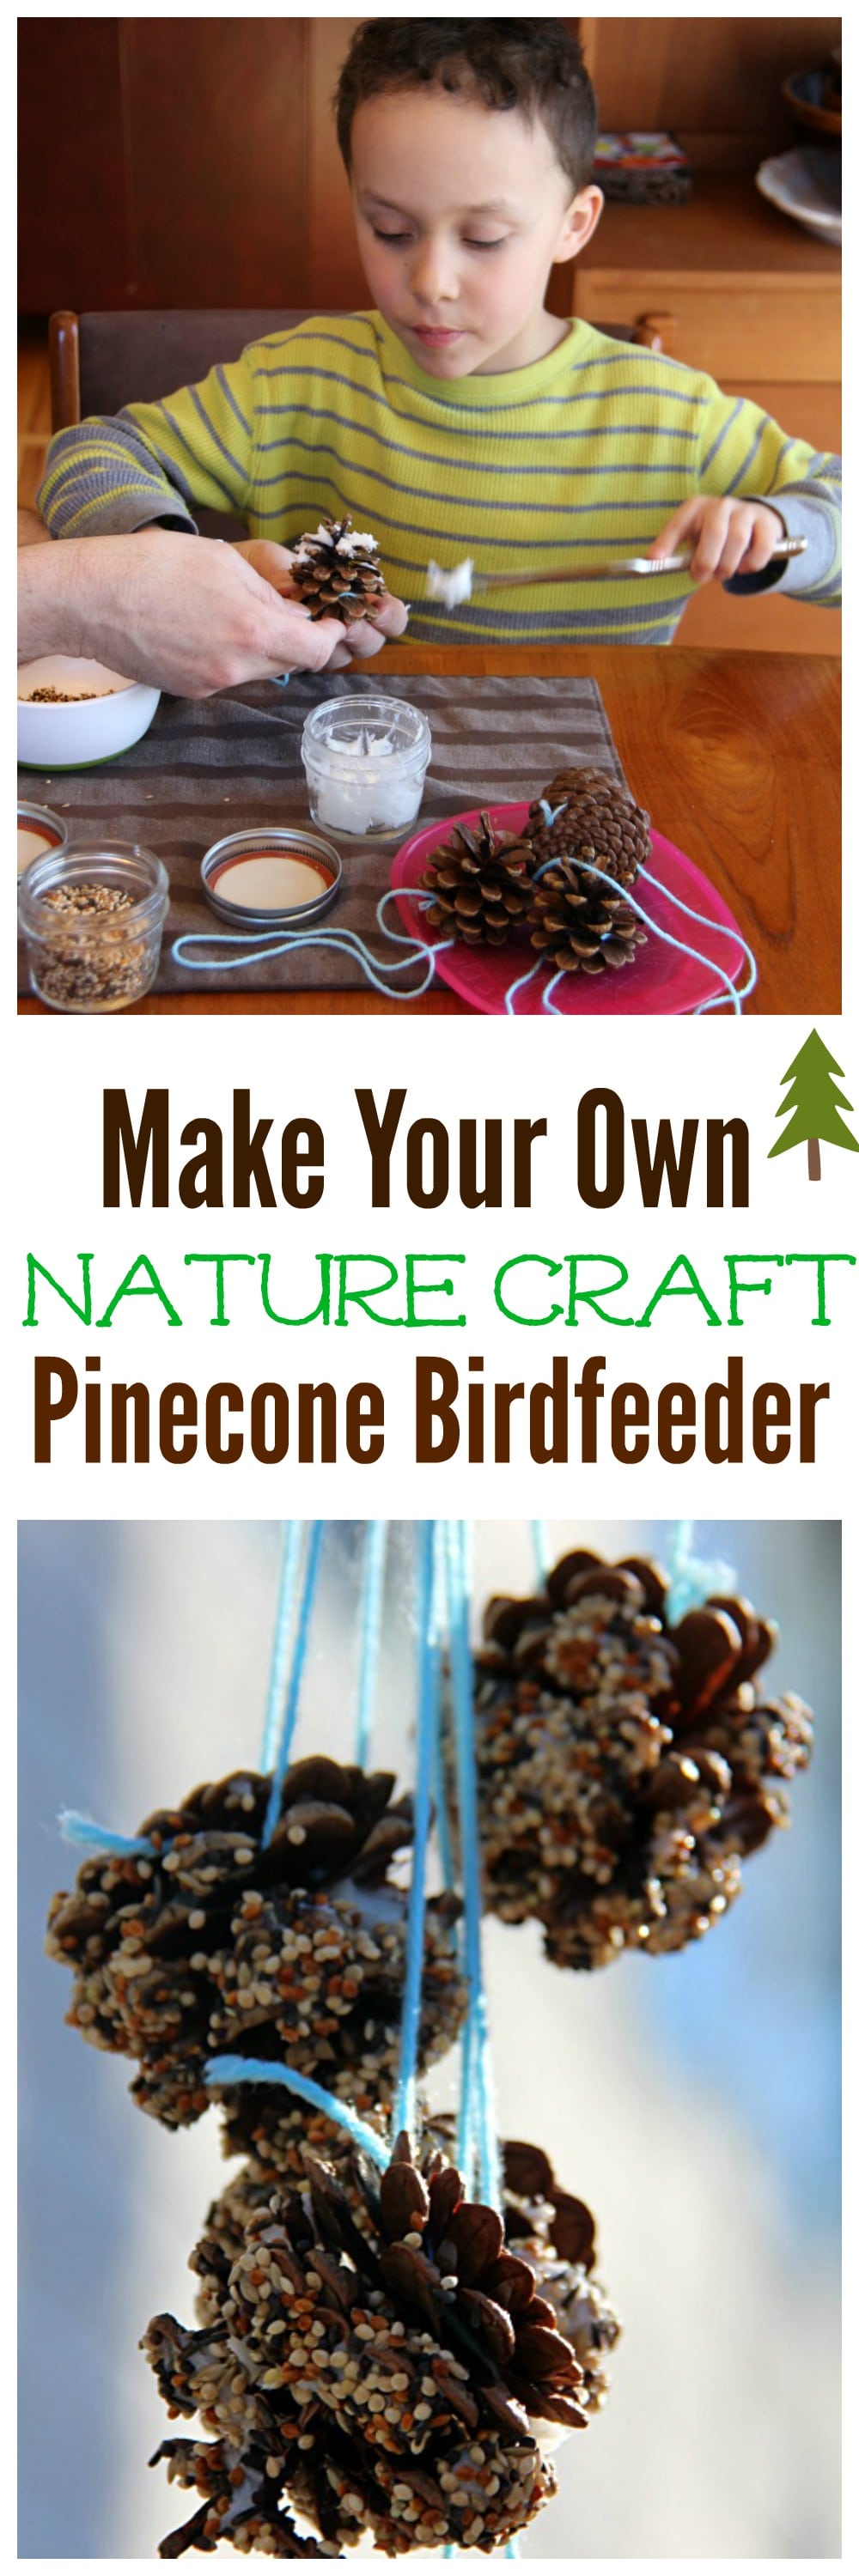 DIY Pinecone Birdfeeder